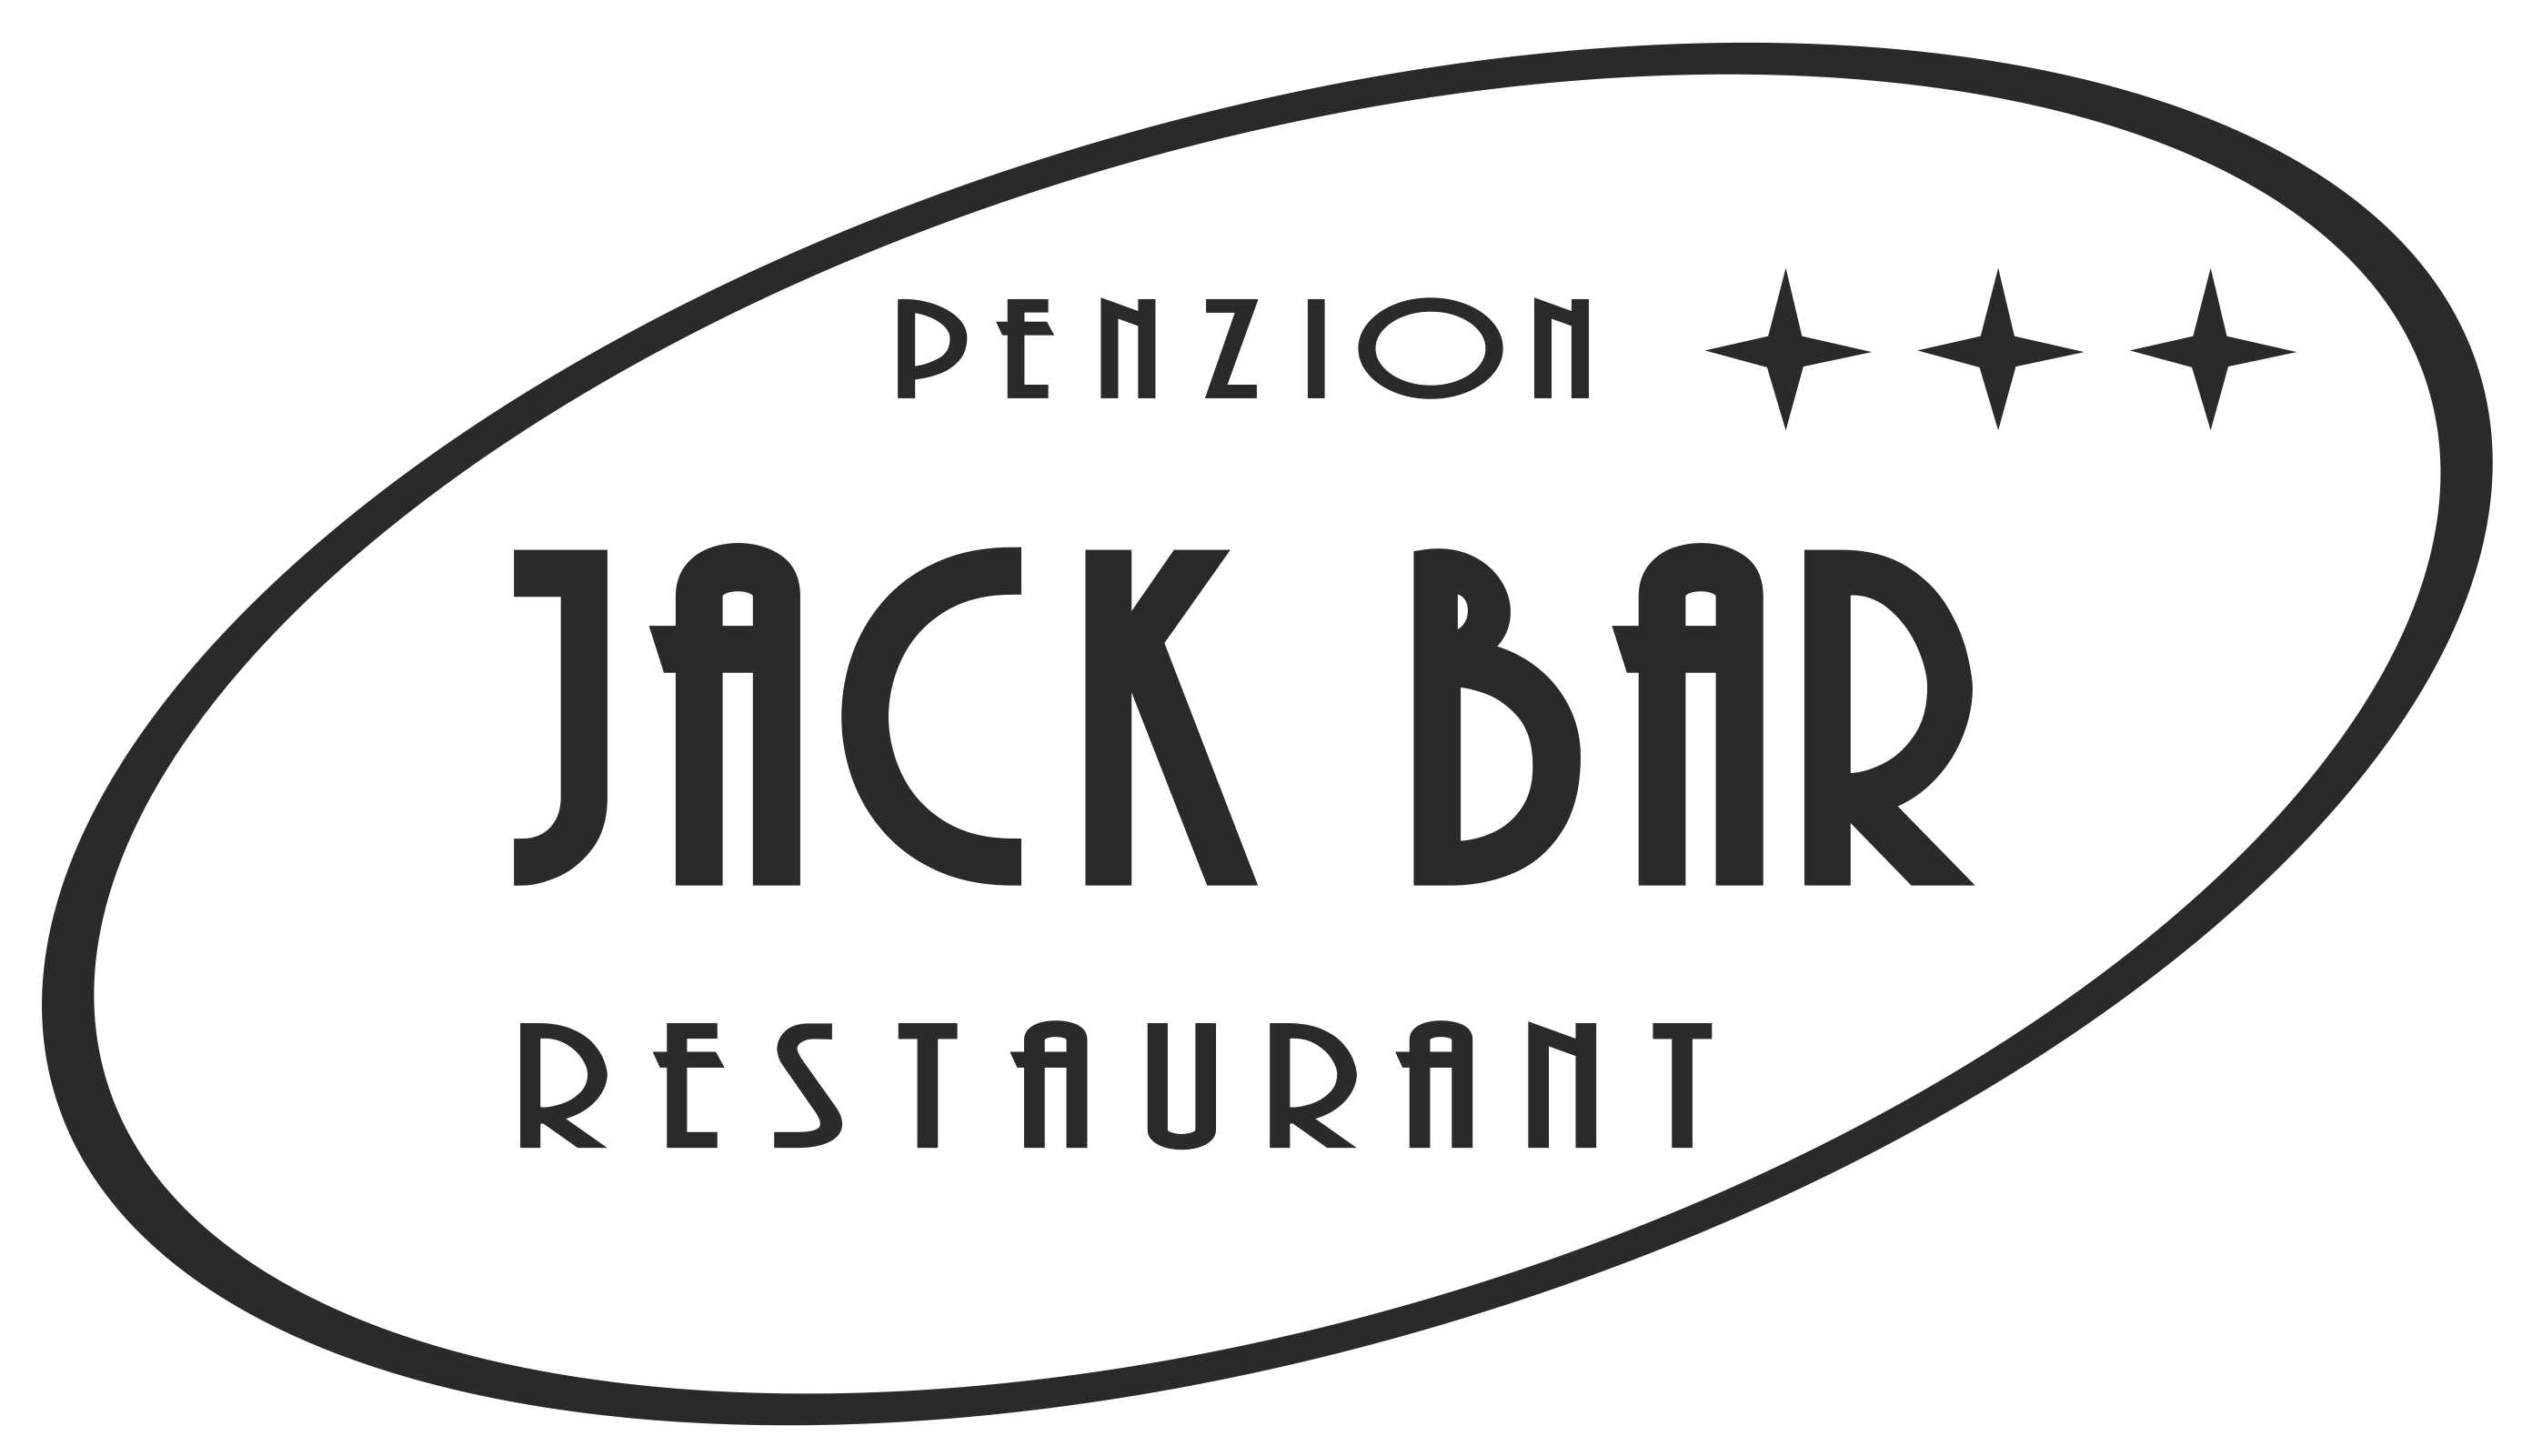 Penzion Jack-bar Restaurant